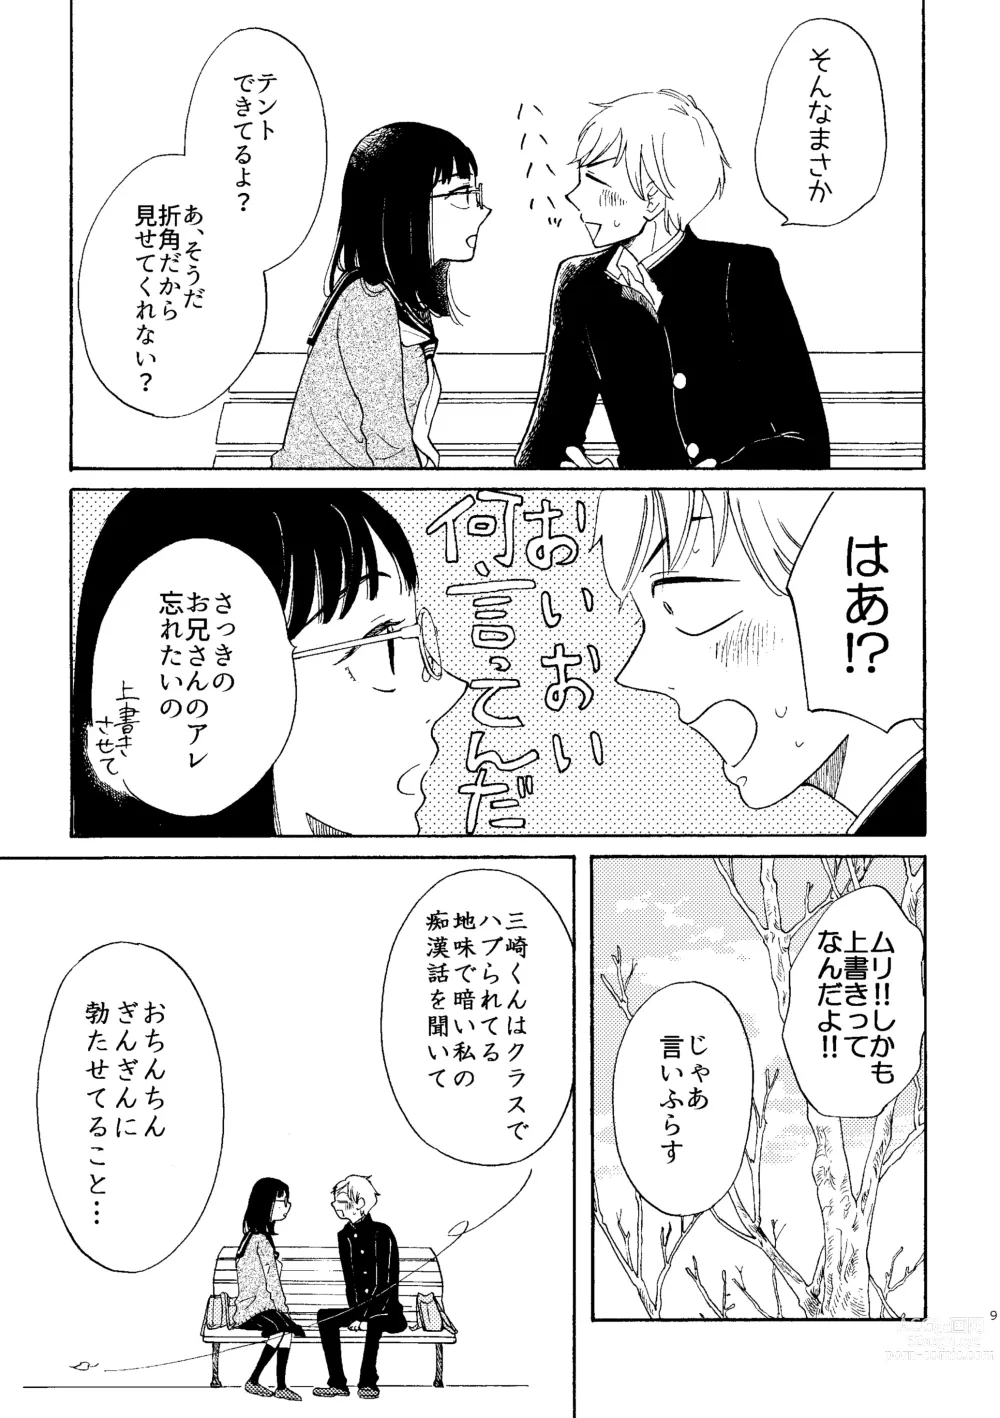 Page 9 of doujinshi Ibitsu na Junjou